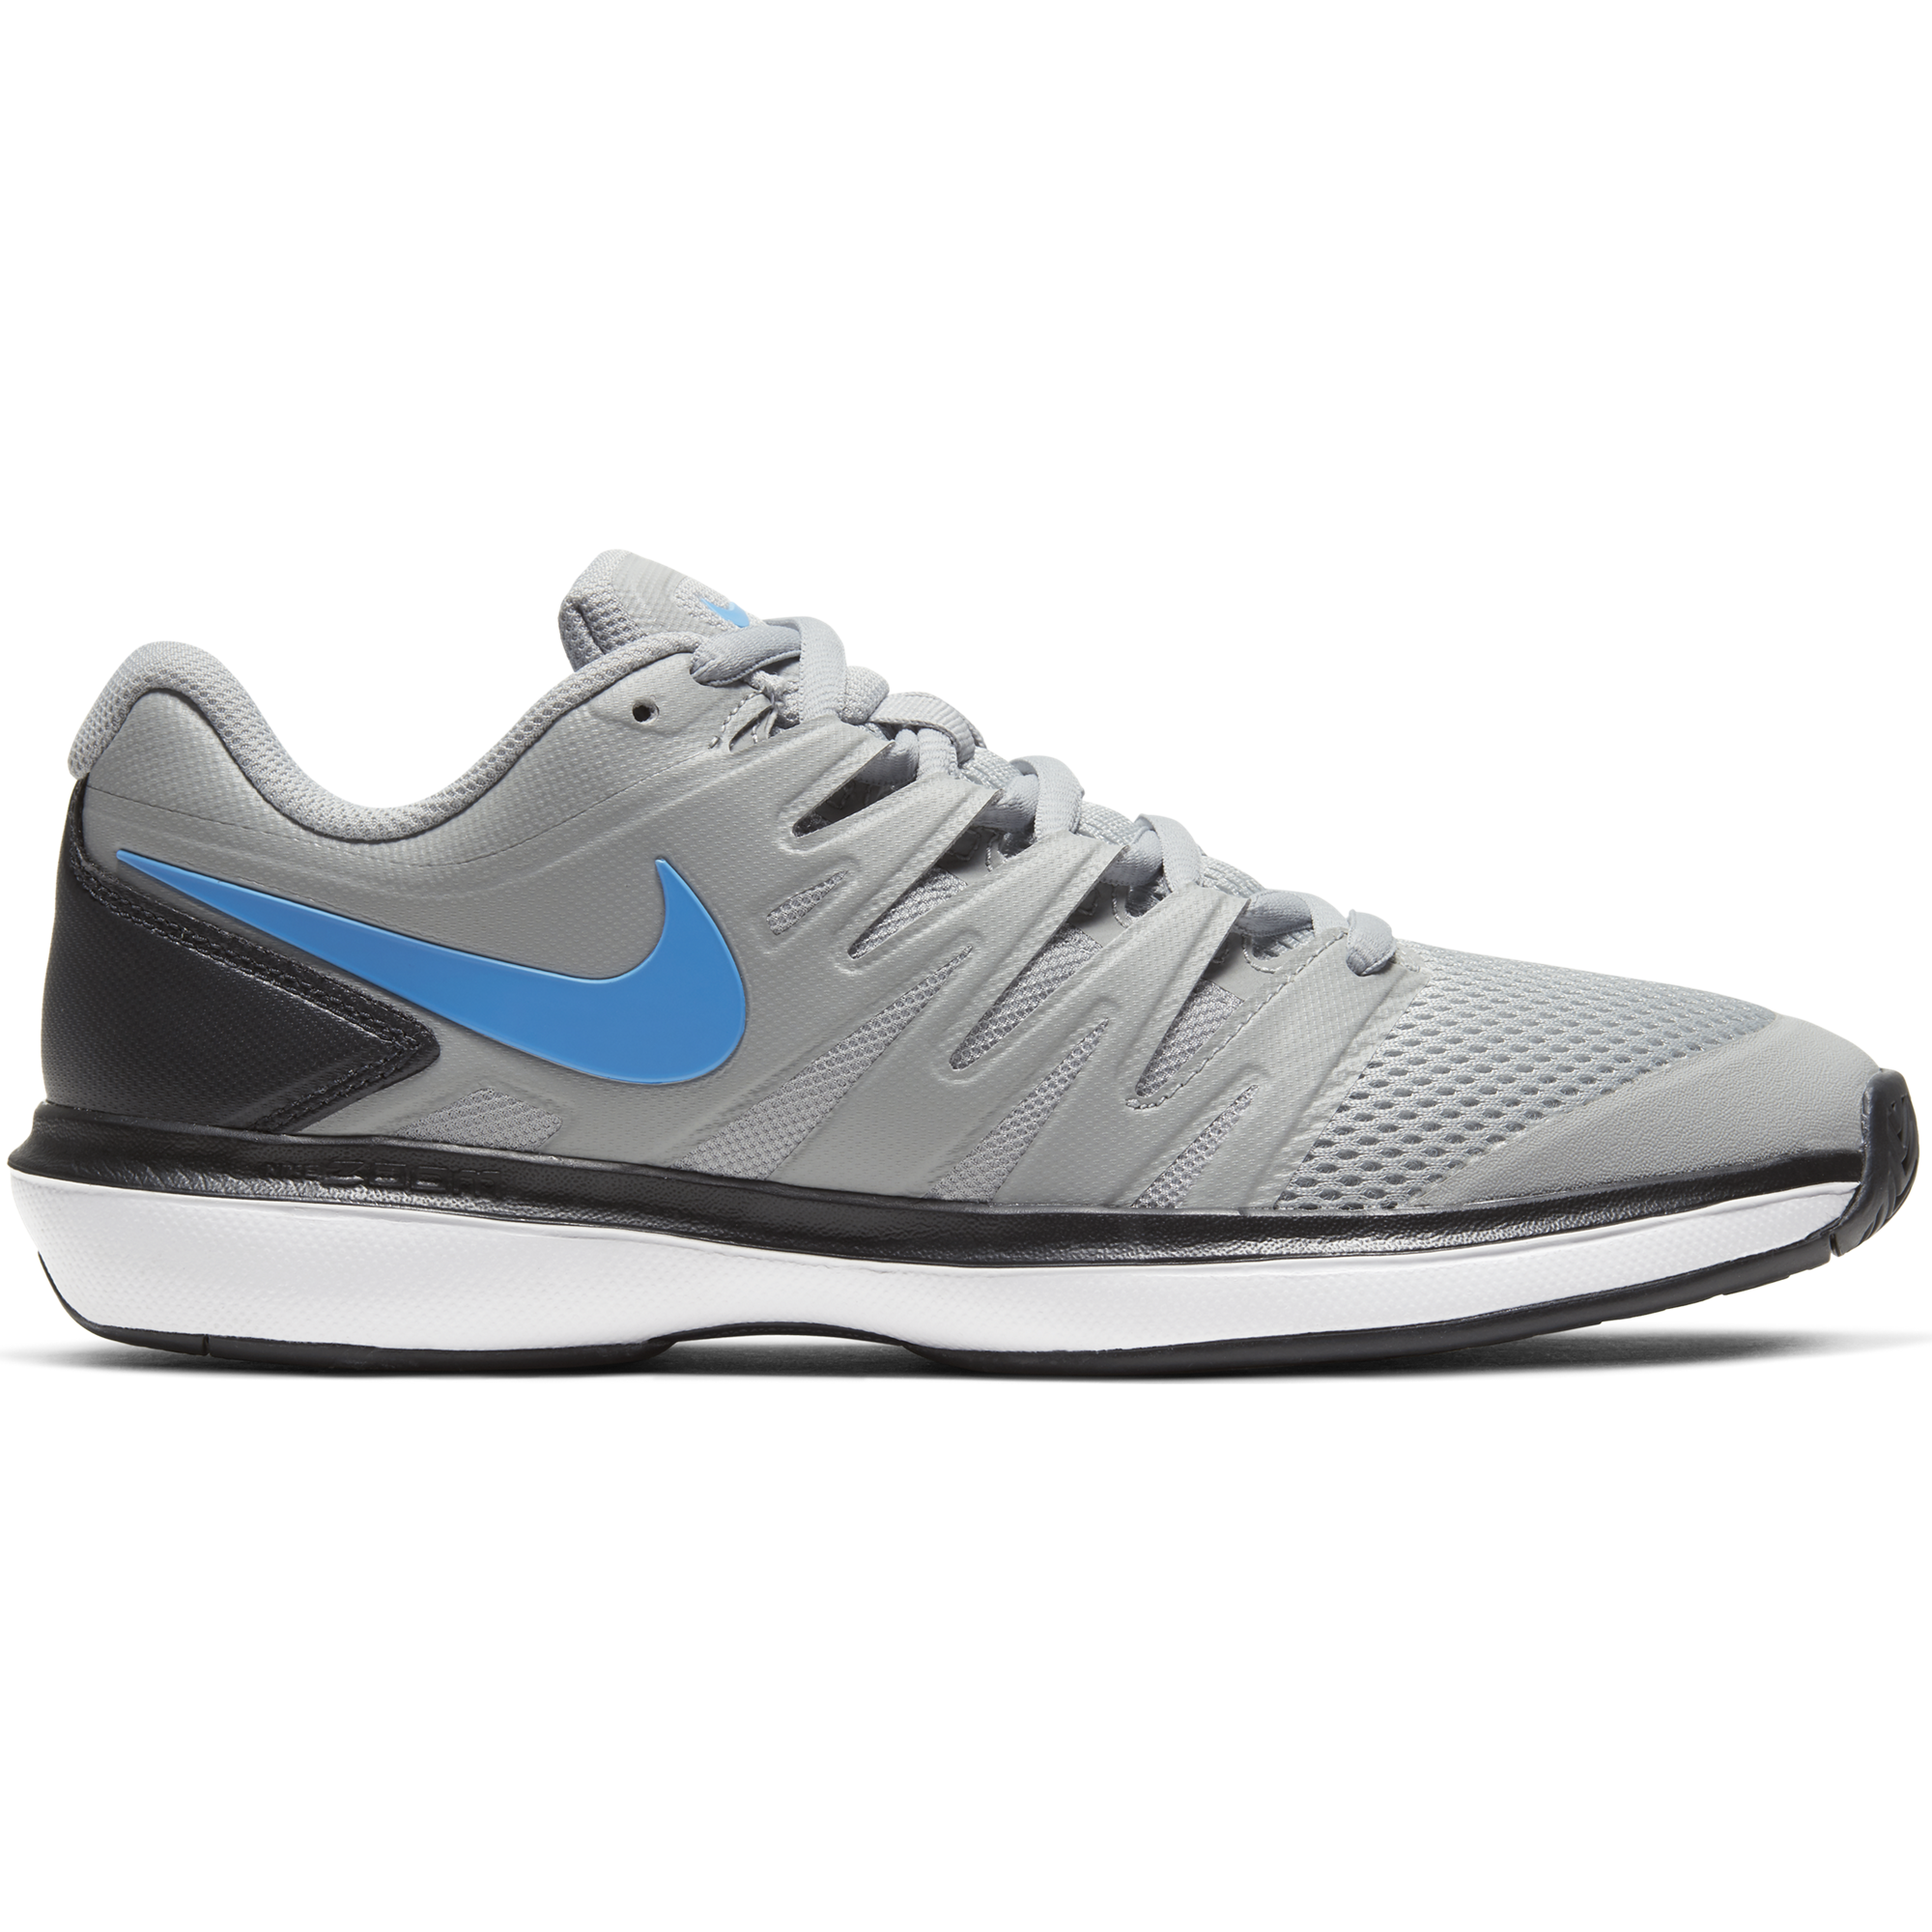 Air Zoom Prestige Men's Tennis Shoe - Grey/Blue